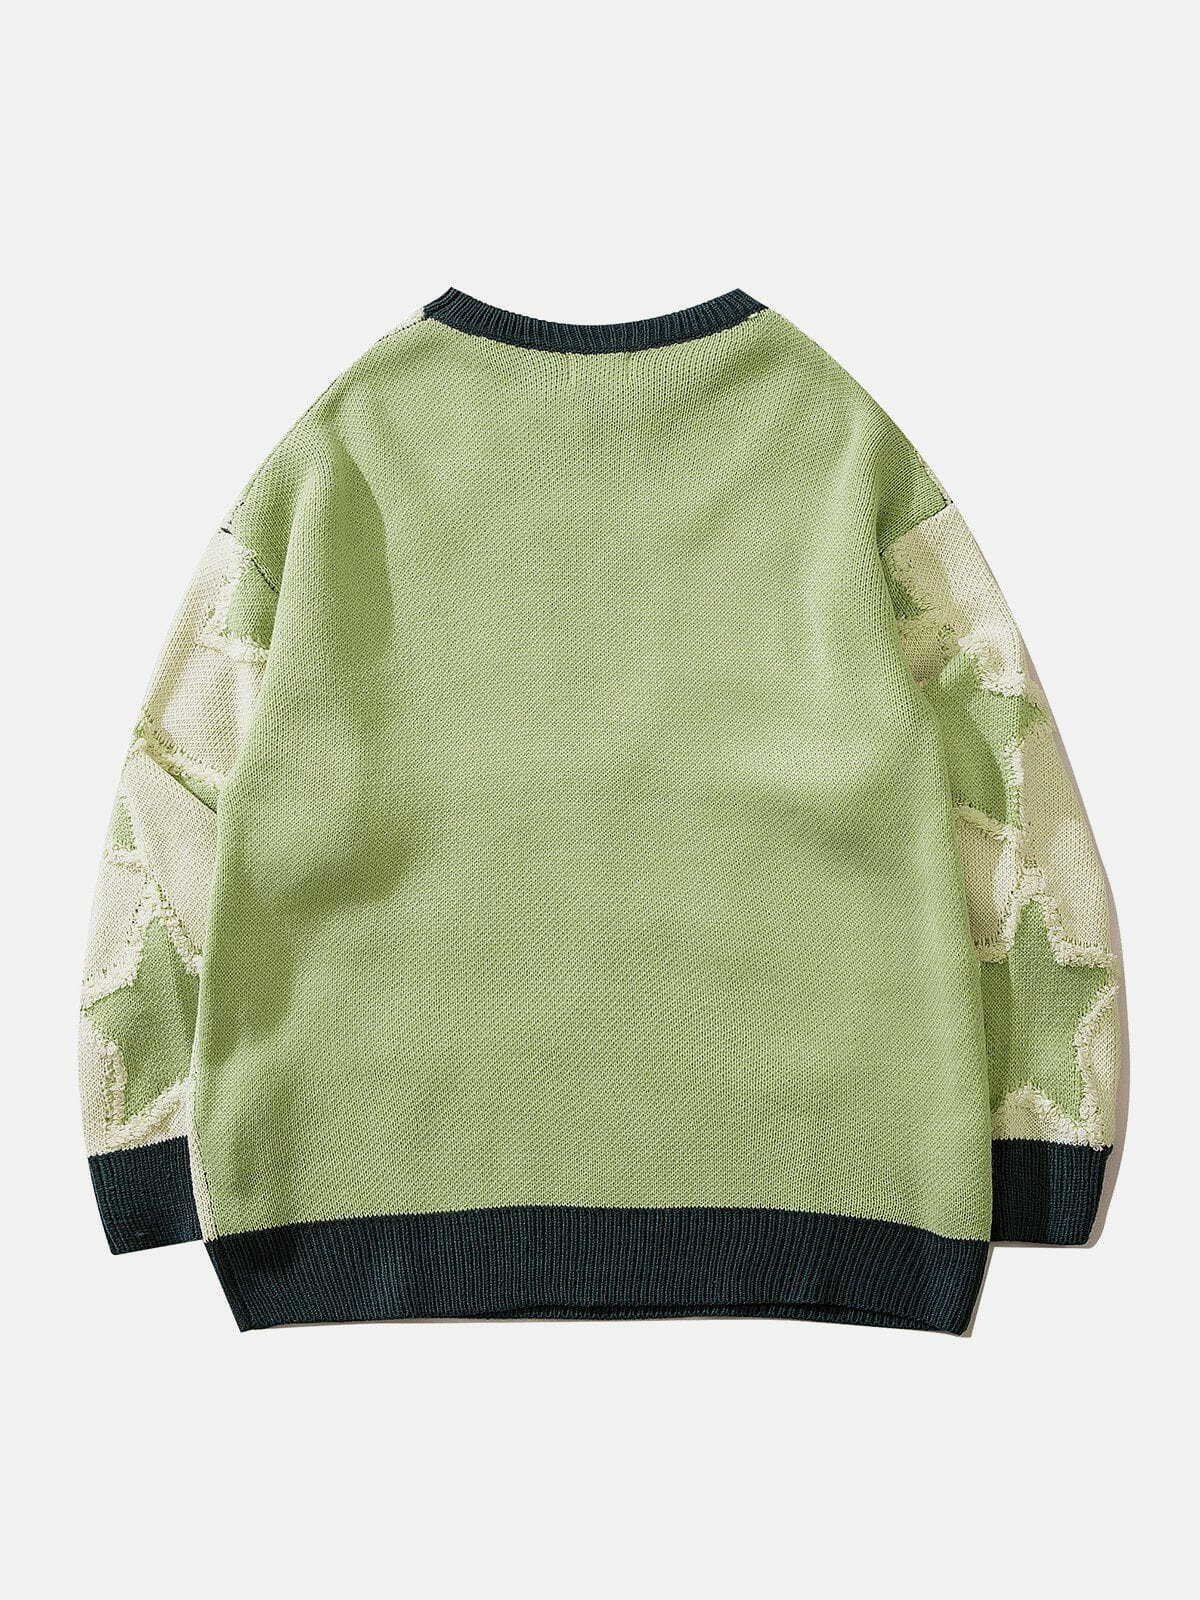 pentagram embroidered sweater edgy & trendy streetwear 5373